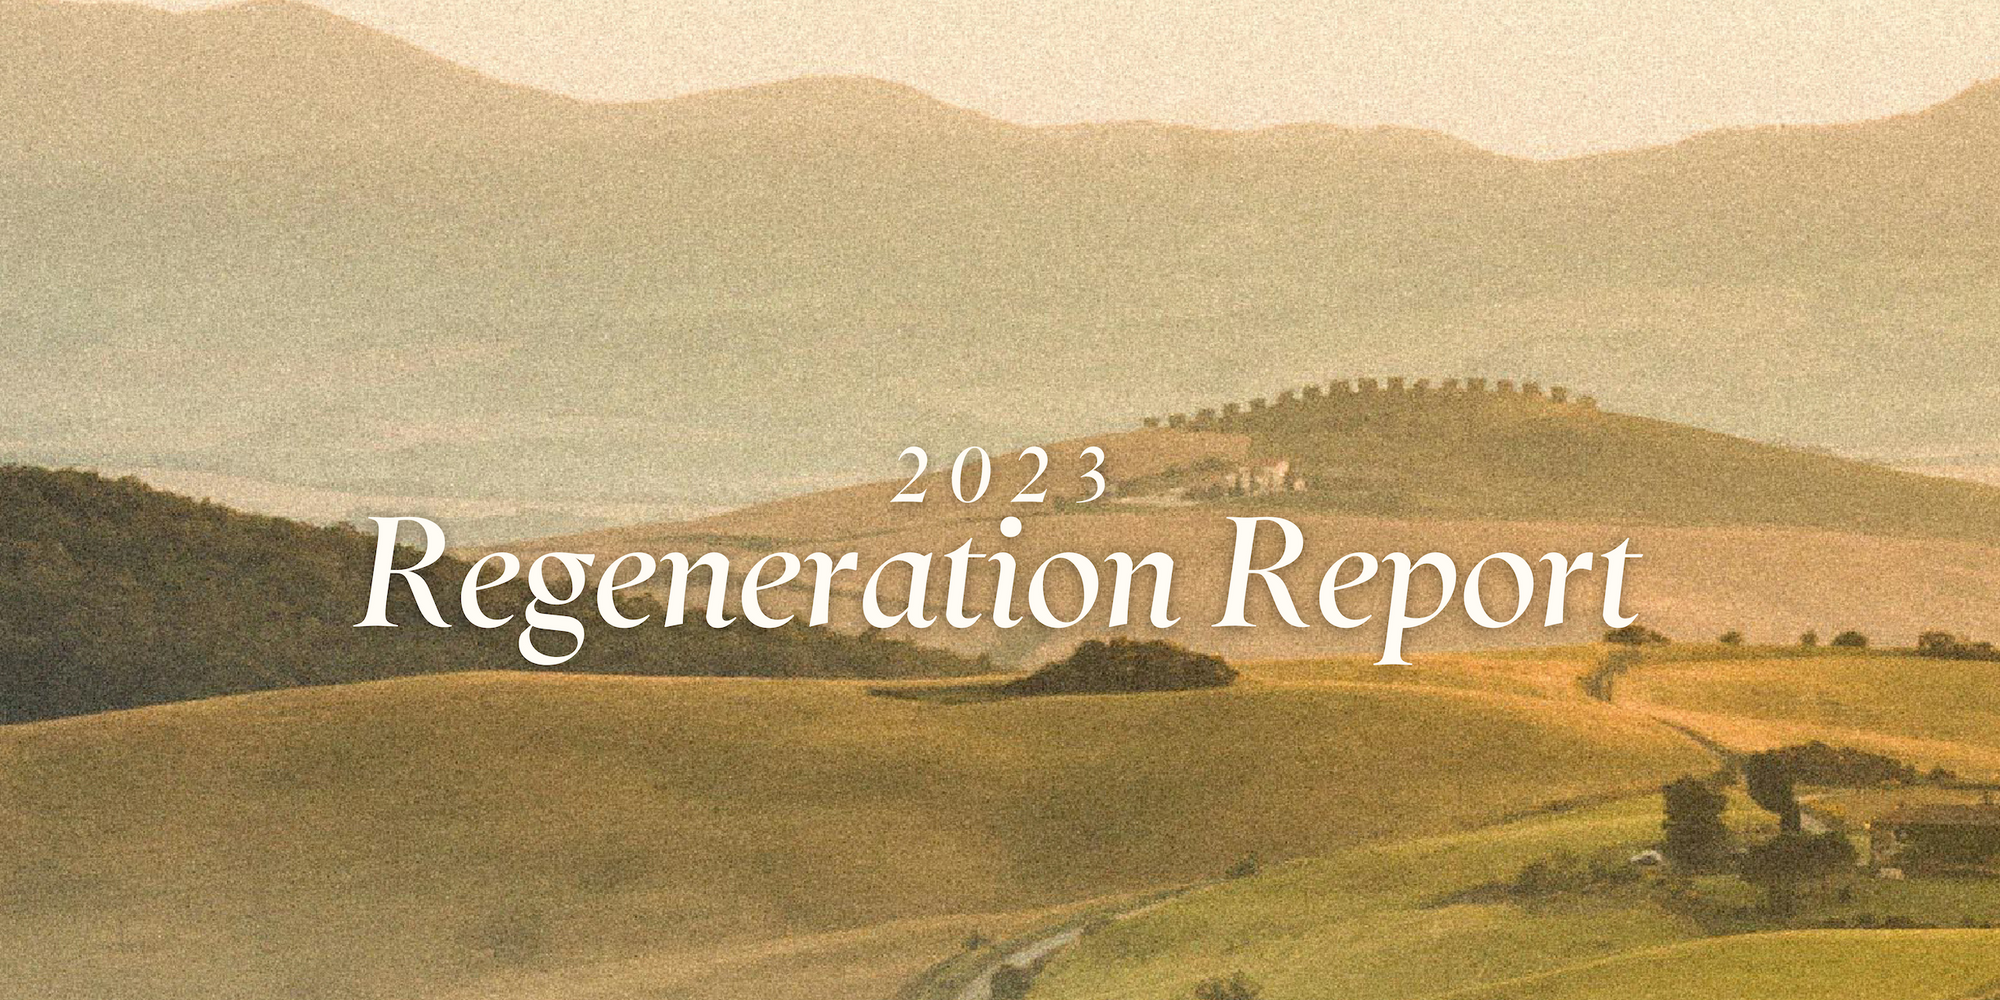 The 2023 Regeneration Report